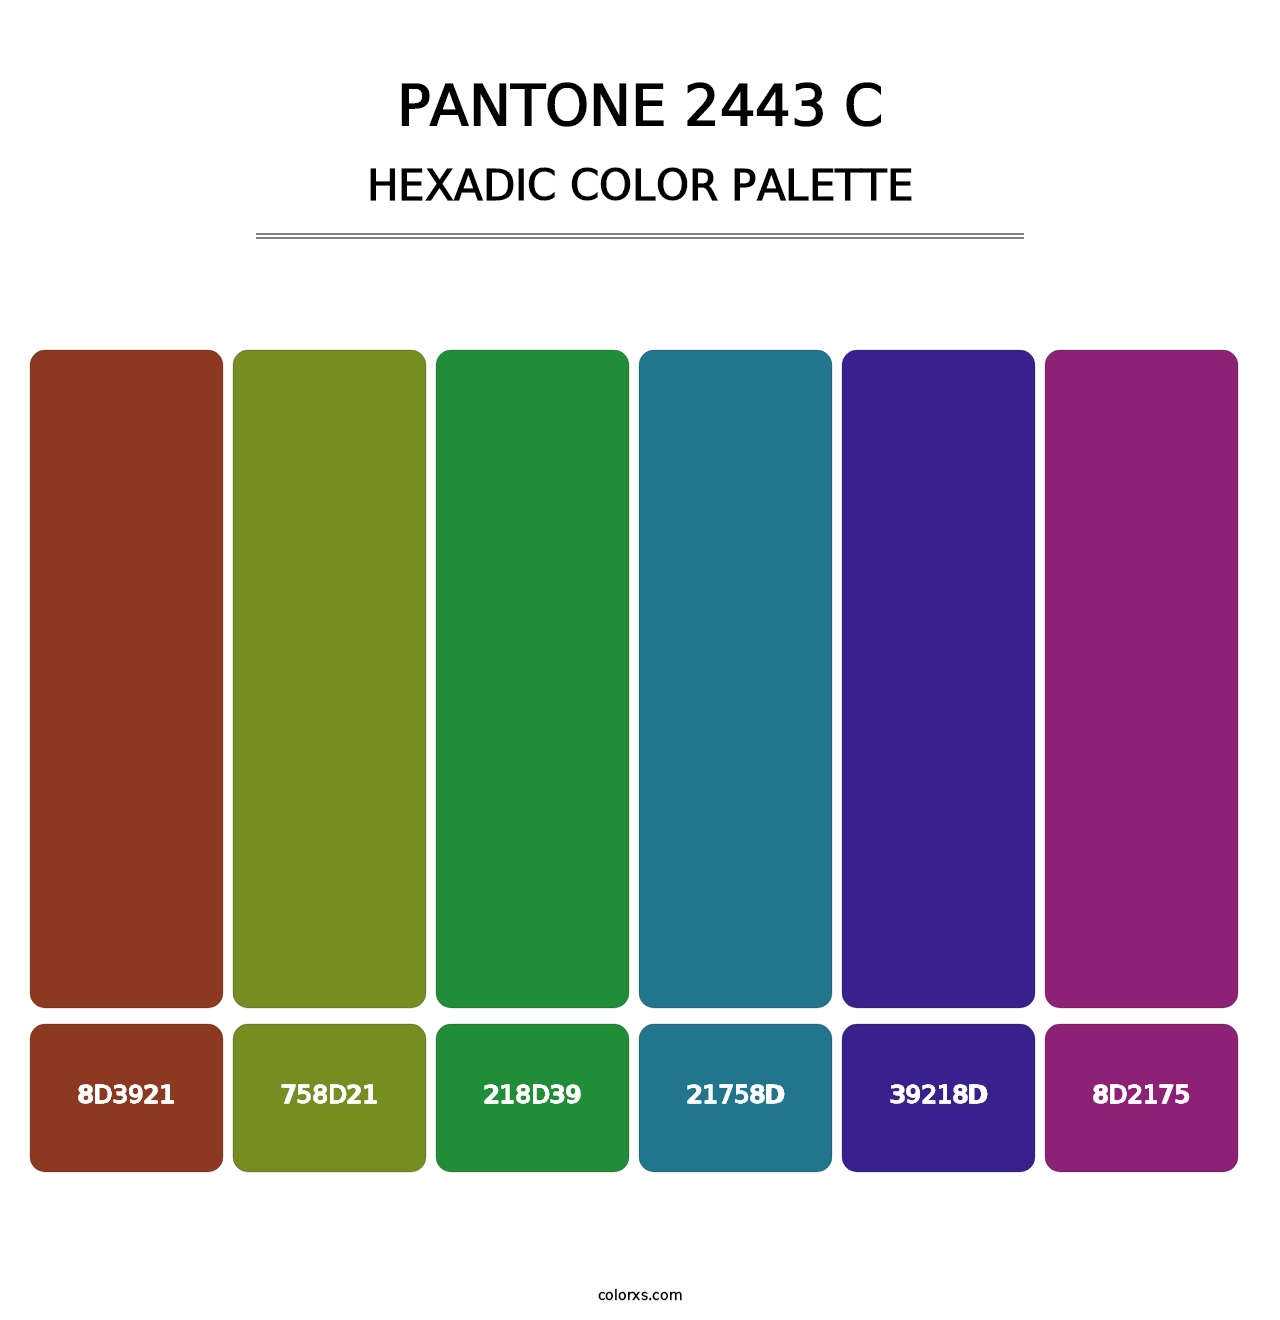 PANTONE 2443 C - Hexadic Color Palette